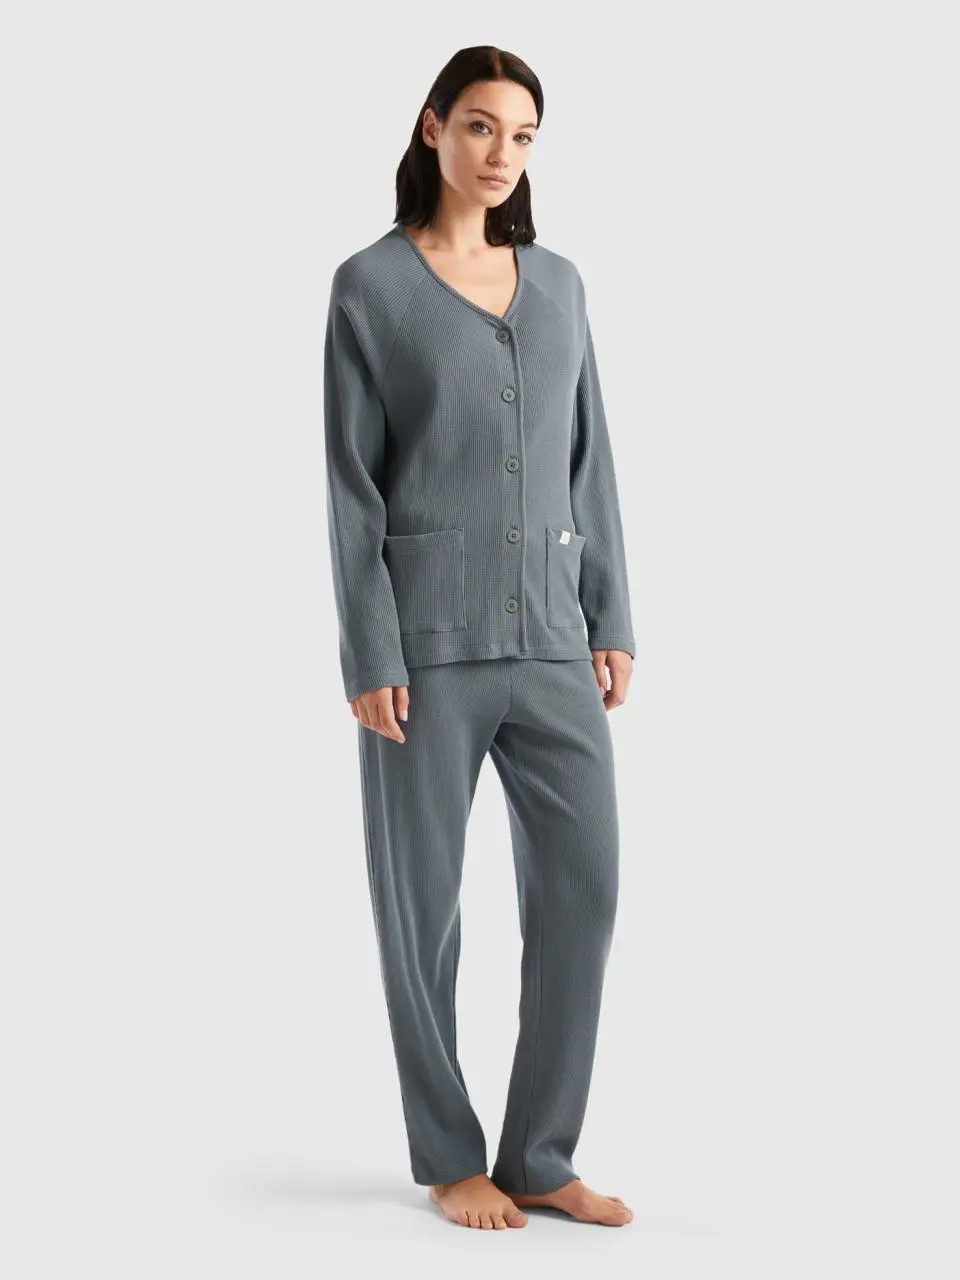 Benetton long pyjamas in pure cotton. 1